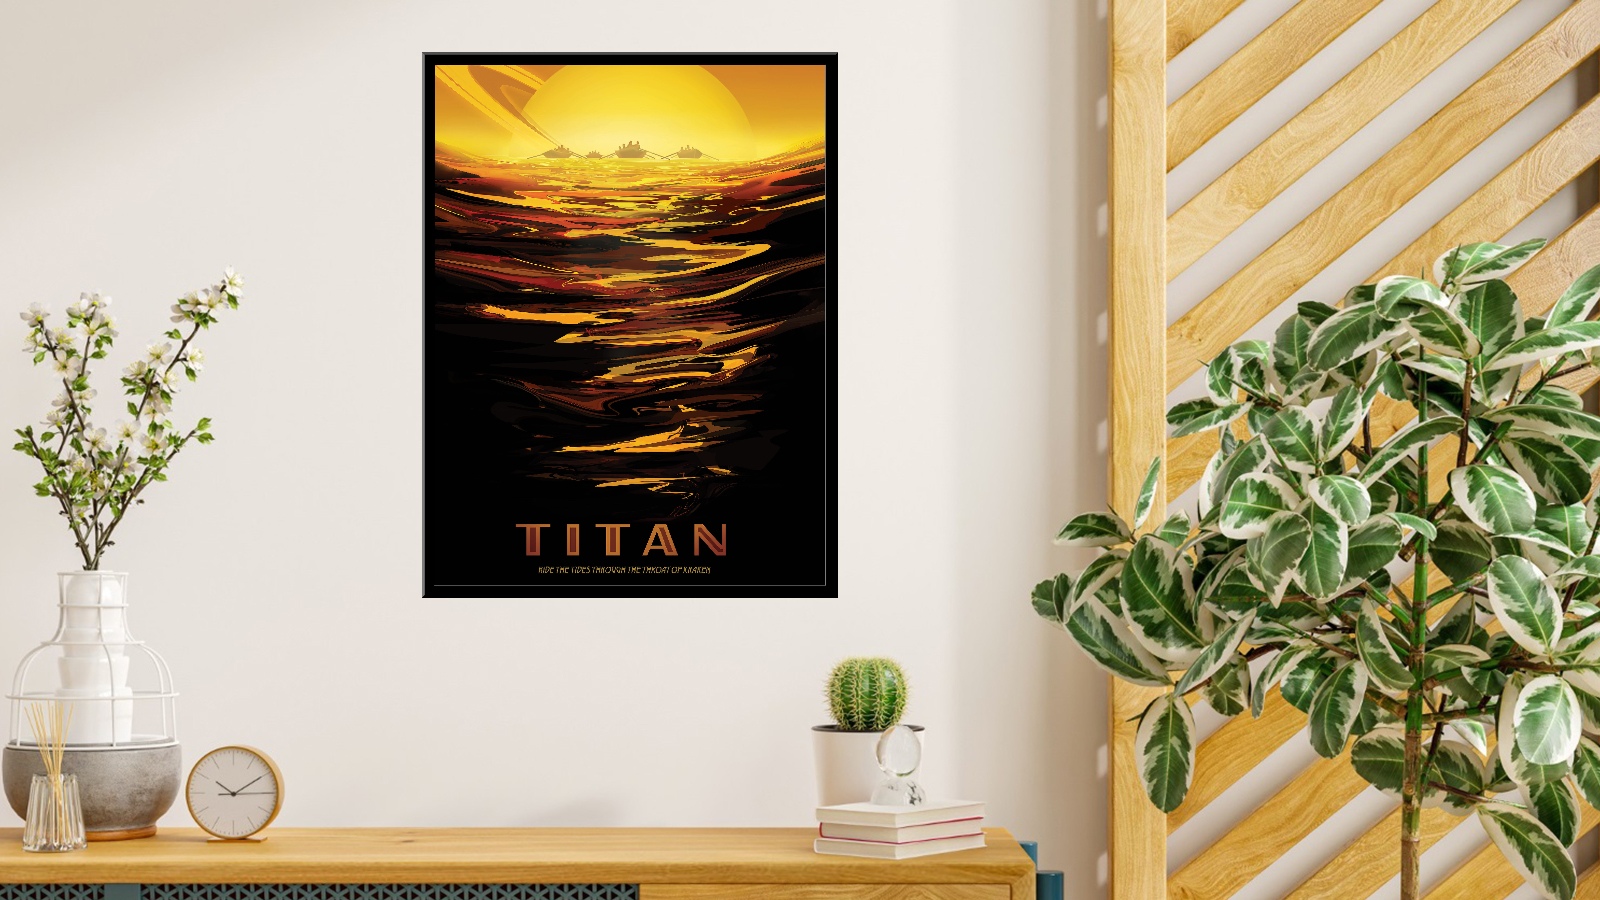 Titan - Ride the tides through the throat of kraken